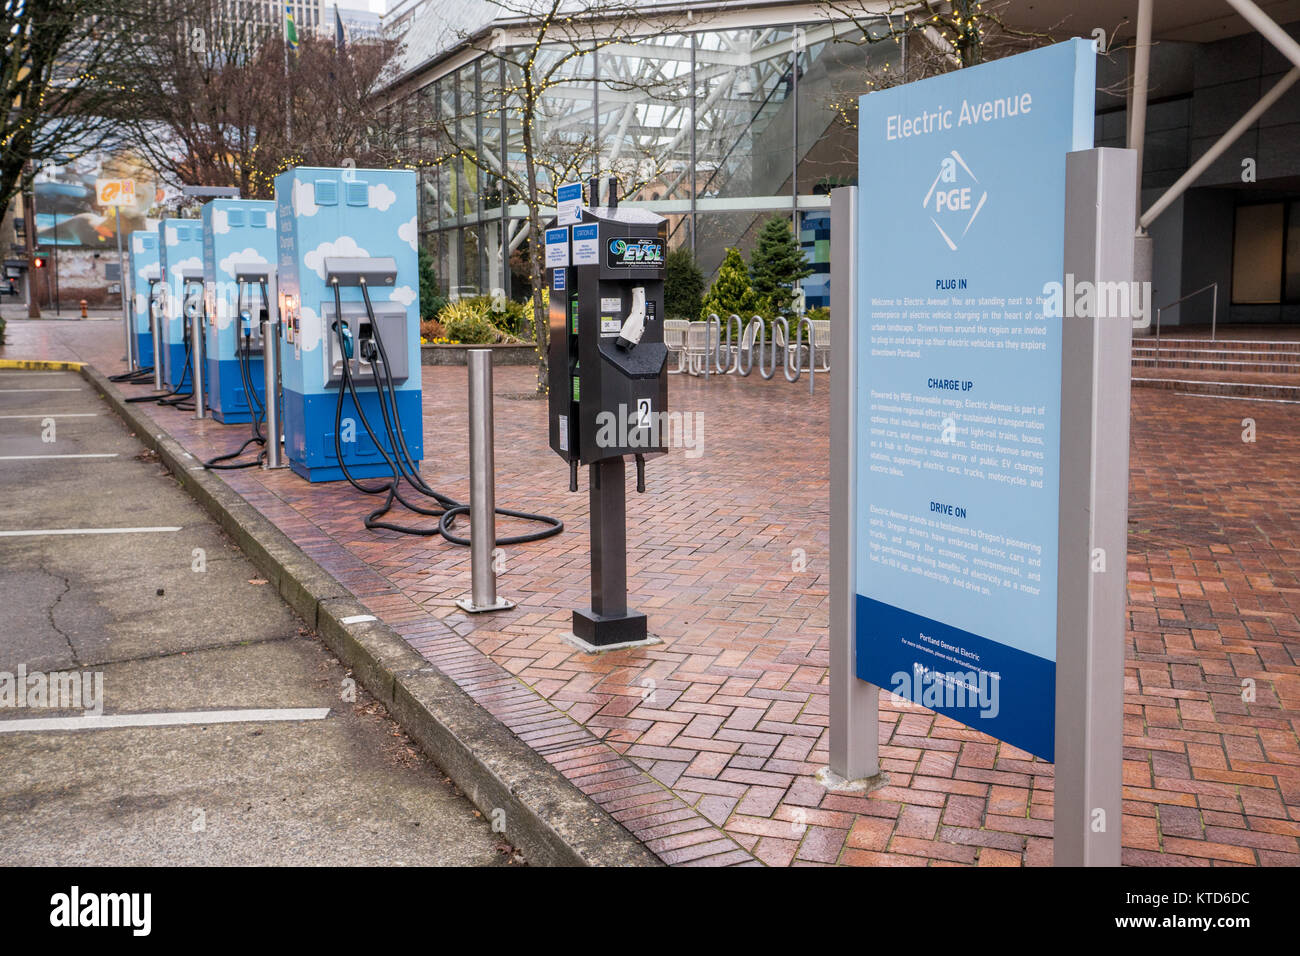 Dec 22, 2017 Portland Oregon A Electric vehicle fast charging station